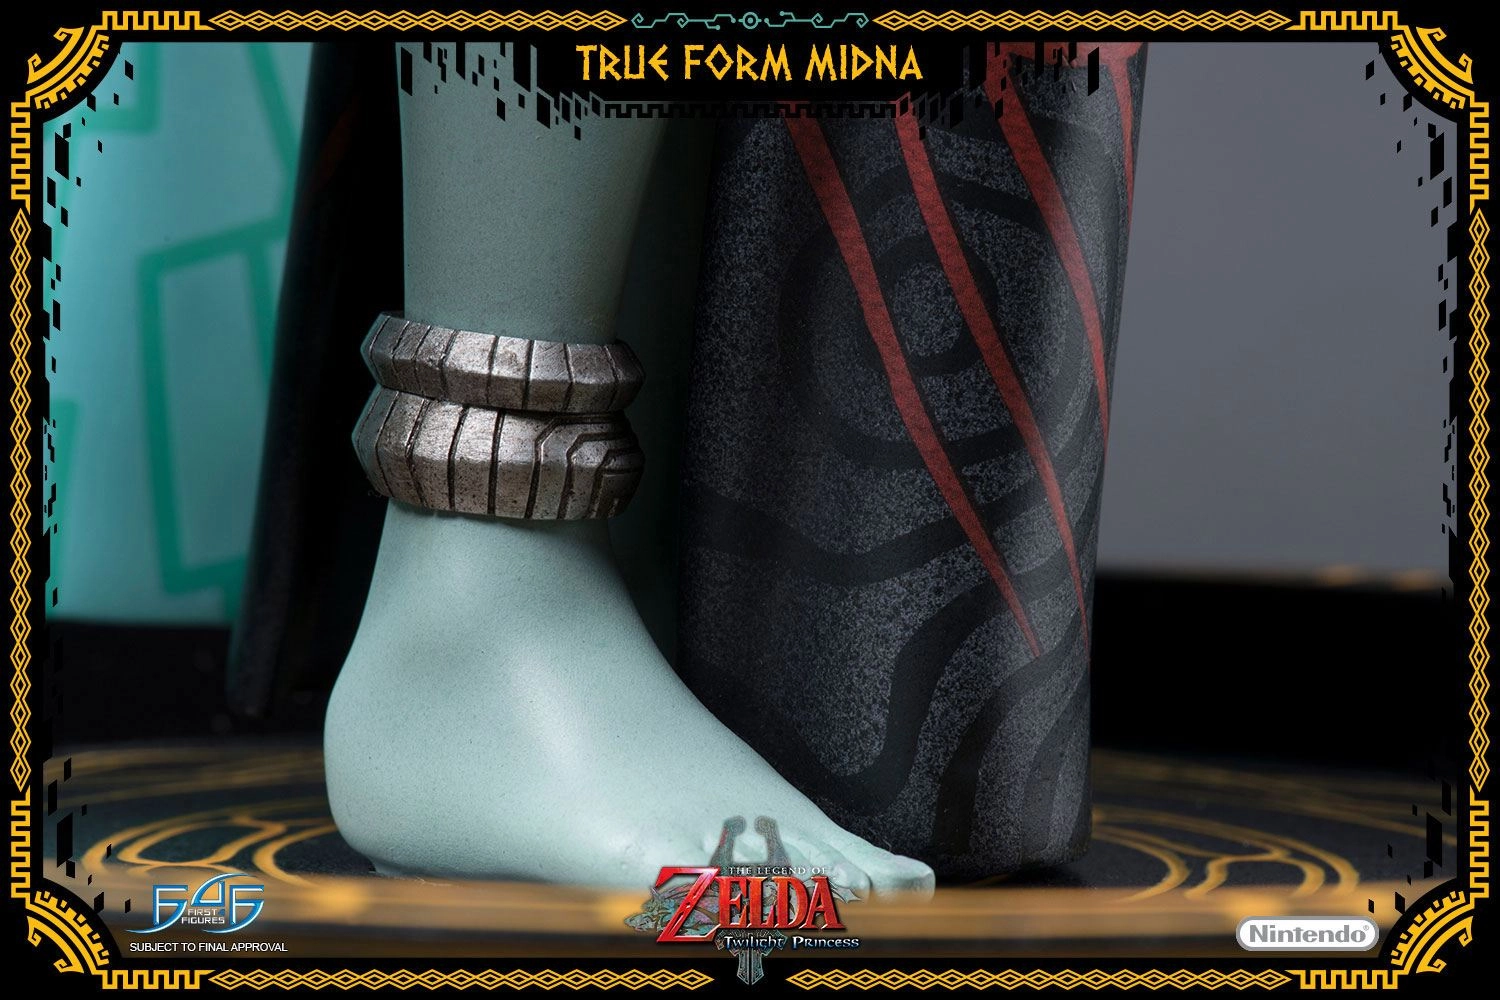 The Legend of Zelda Twilight Princess statuette True Form Midna 43 cm